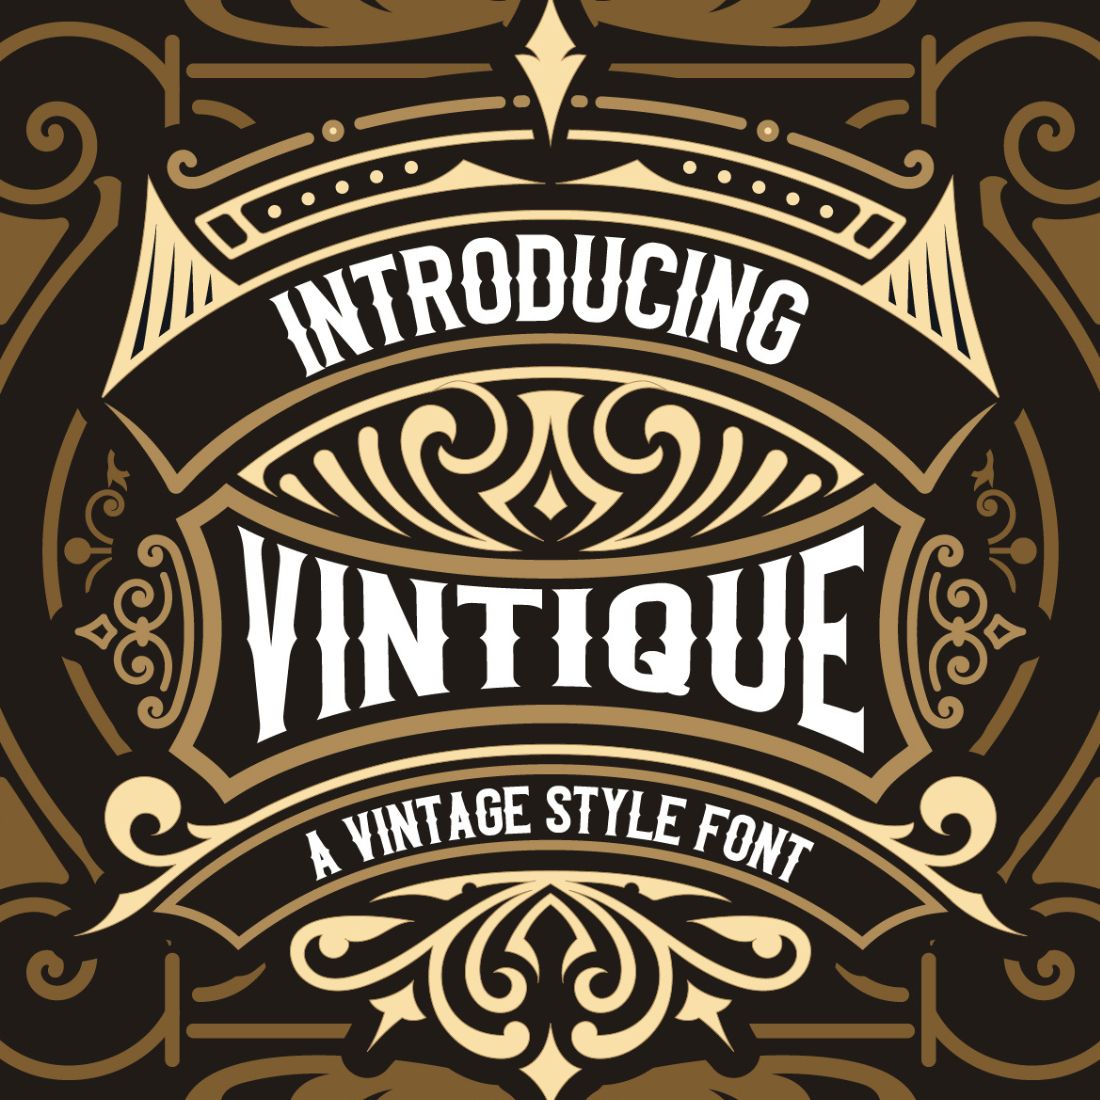 Vintique Vintage Font cover image.